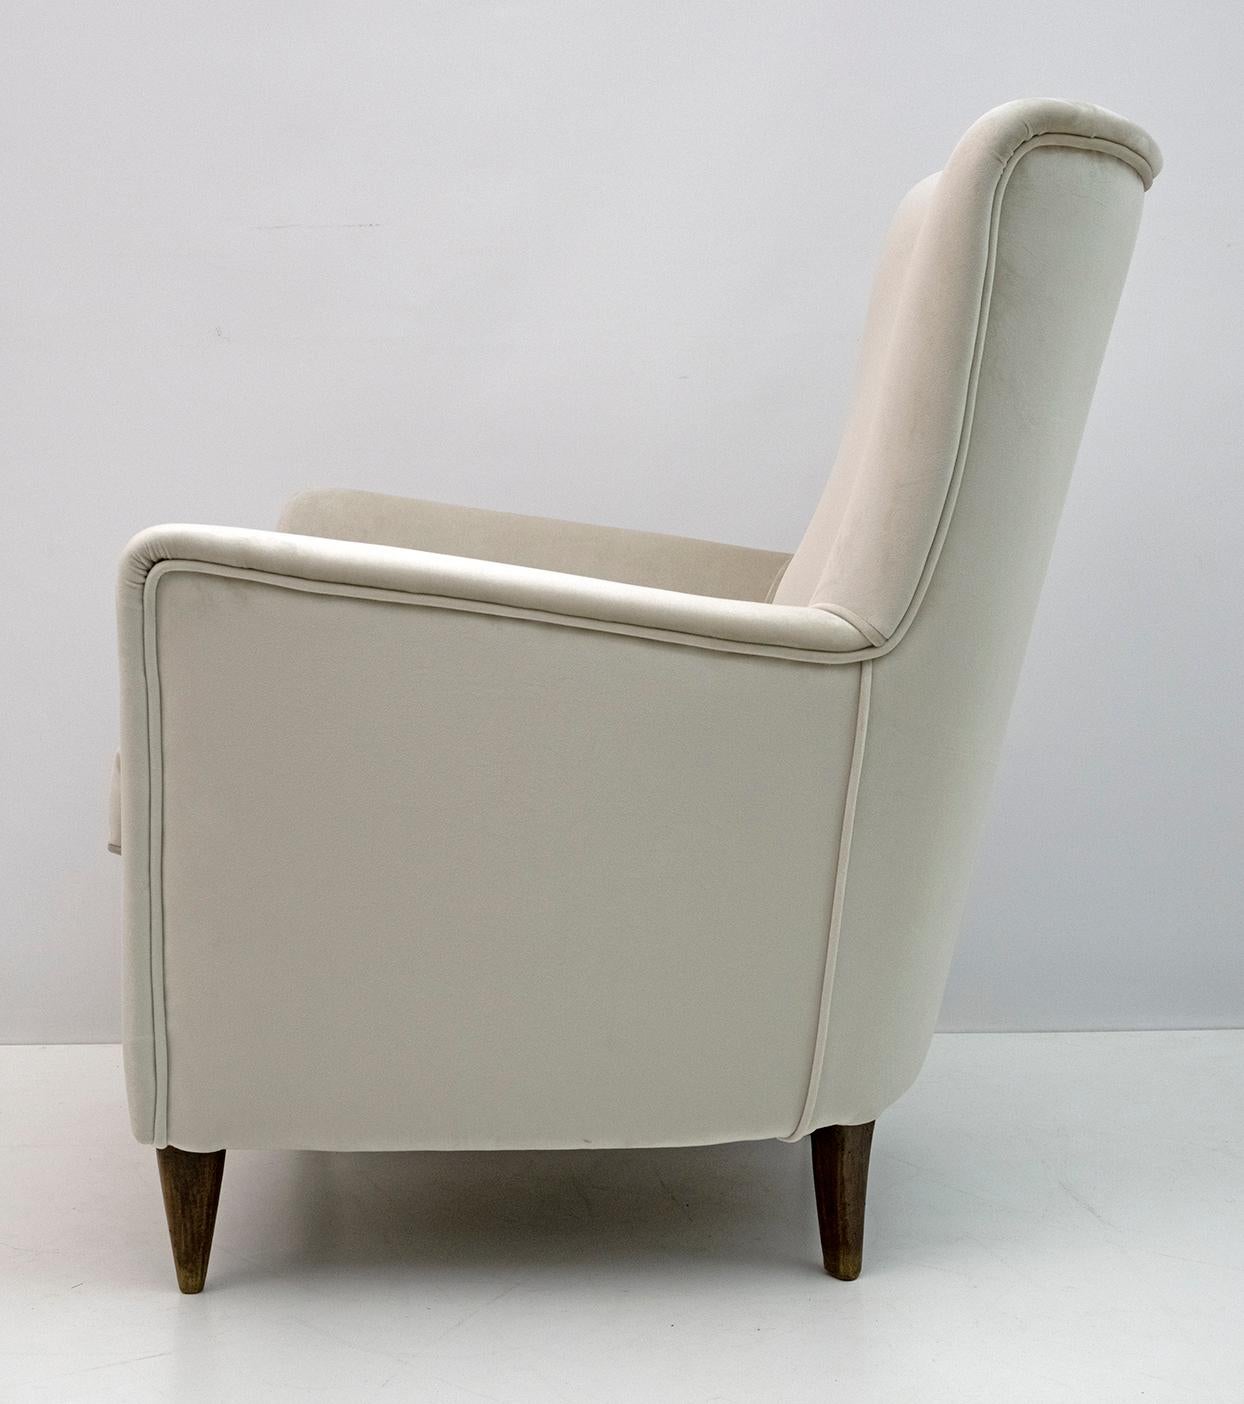 Pair of Gio Ponti Style Mid-Century Modern Italian Velvet Armchairs for Isa, 50s For Sale 7